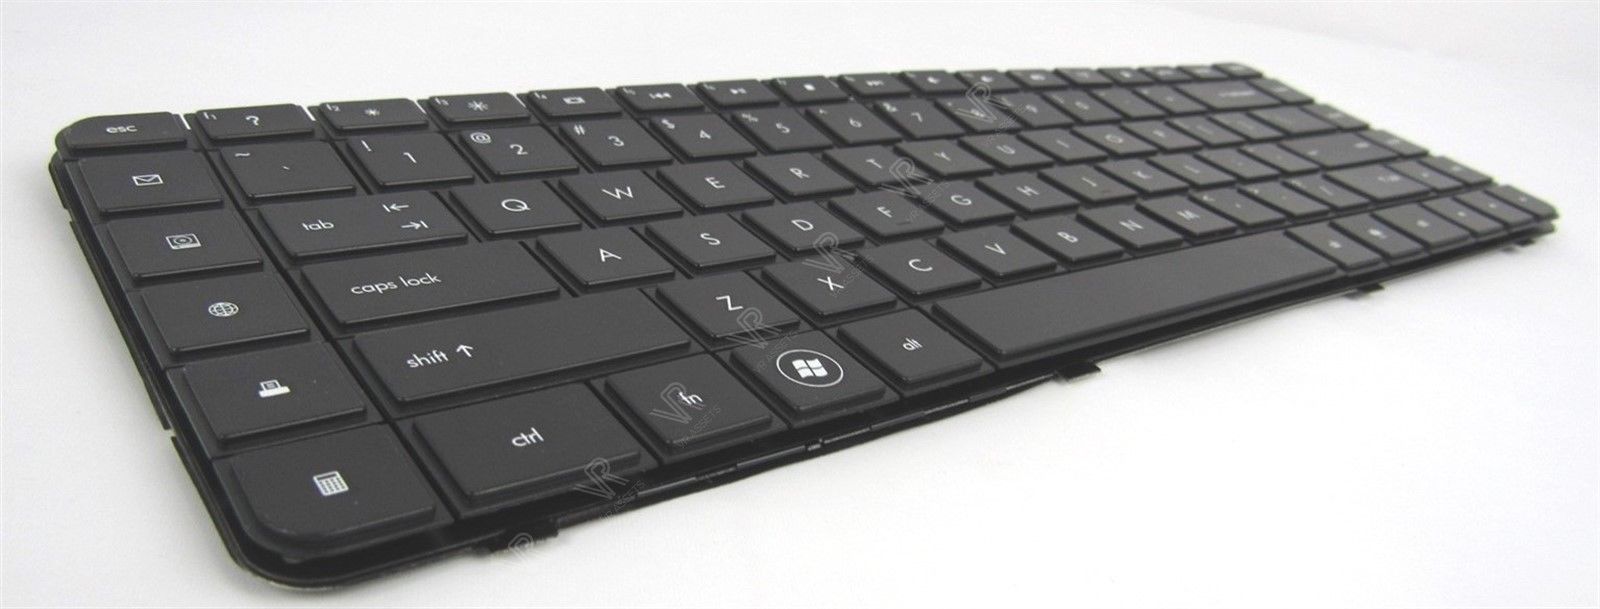 HP Compaq Presario CQ62 G62 Laptop Keyboard Black NSK-HV0SQ 001 588976-001